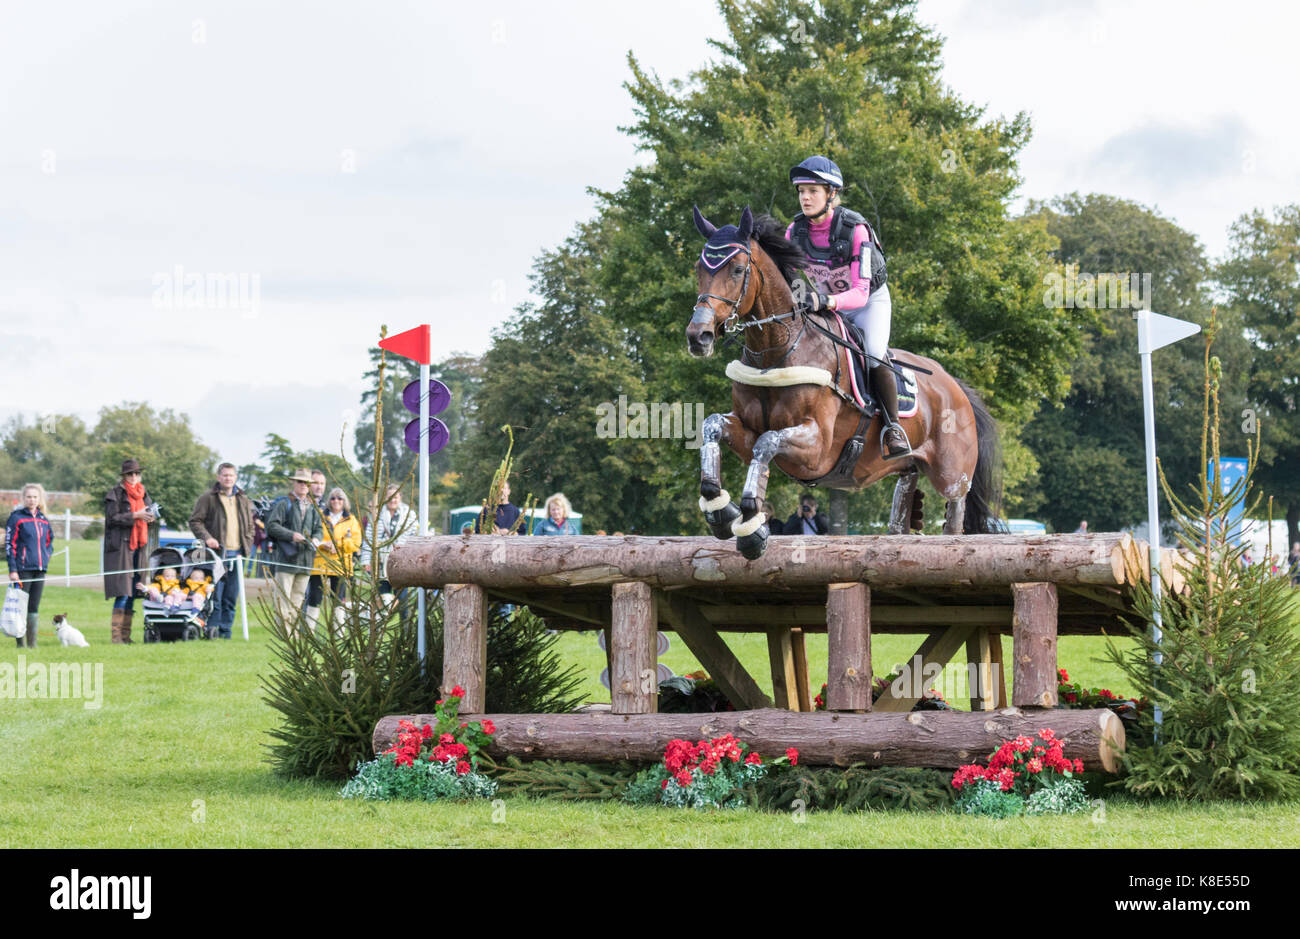 Clara Loiseau on Ultramaille, Blenheim Palace International Horse Trials 16th September 2017 Stock Photo